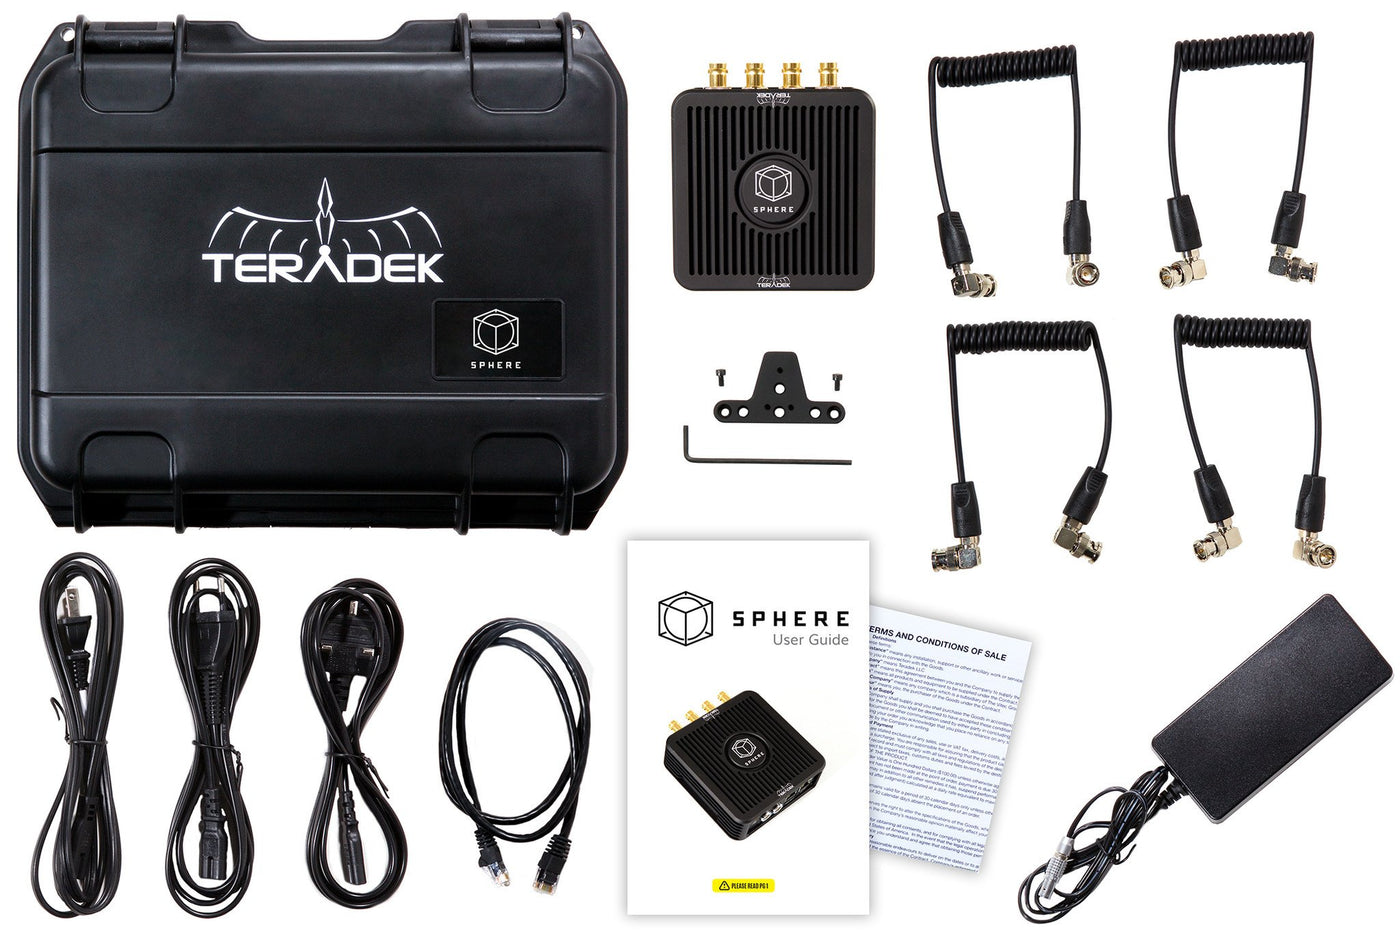 Teradek Sphere SDI Wireless 360 Real-Time Video Monitoring Package